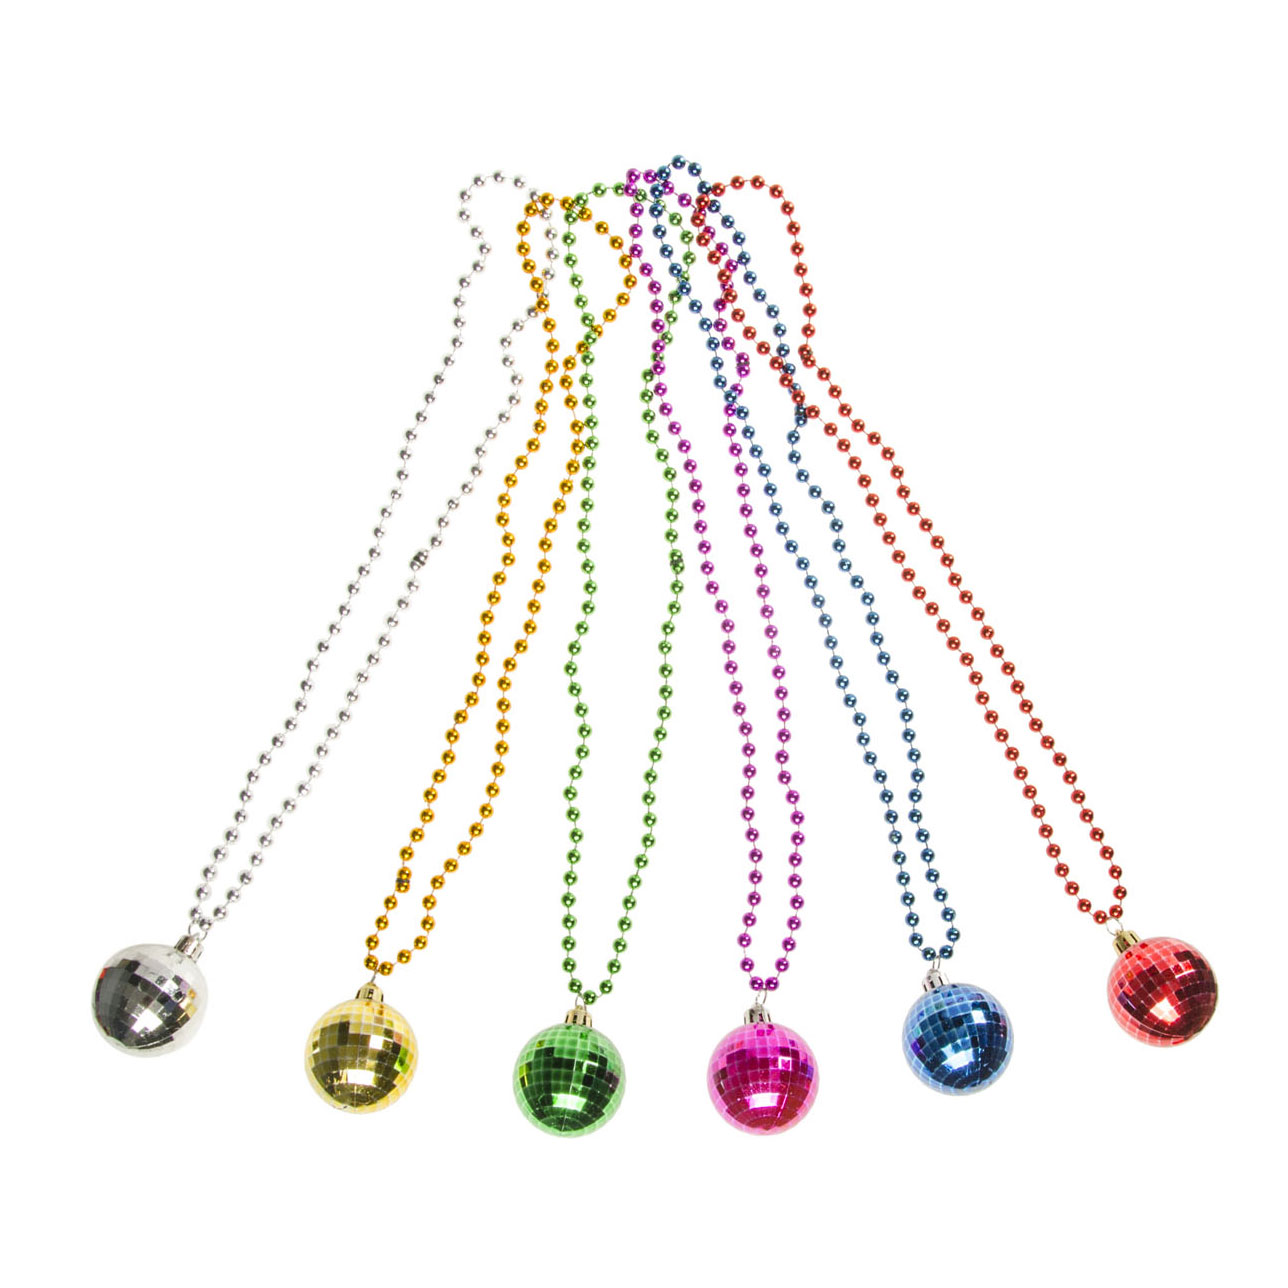 Amazon.com: Zugar Land 70s Disco Ball Necklace Assortment (2 Inch Discoball)  26